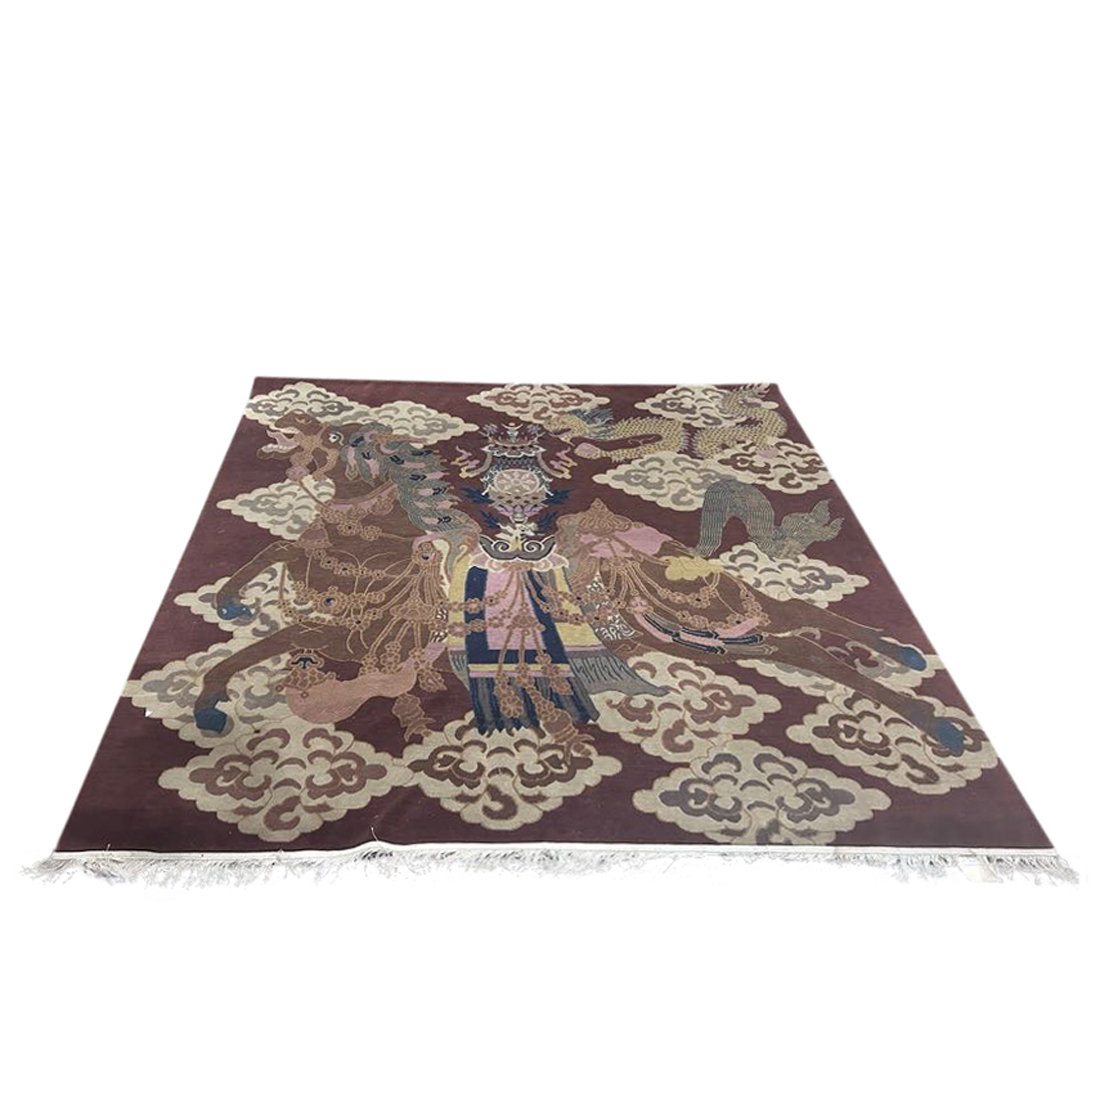 A NEPALESE CARPET A Nepalese carpet,